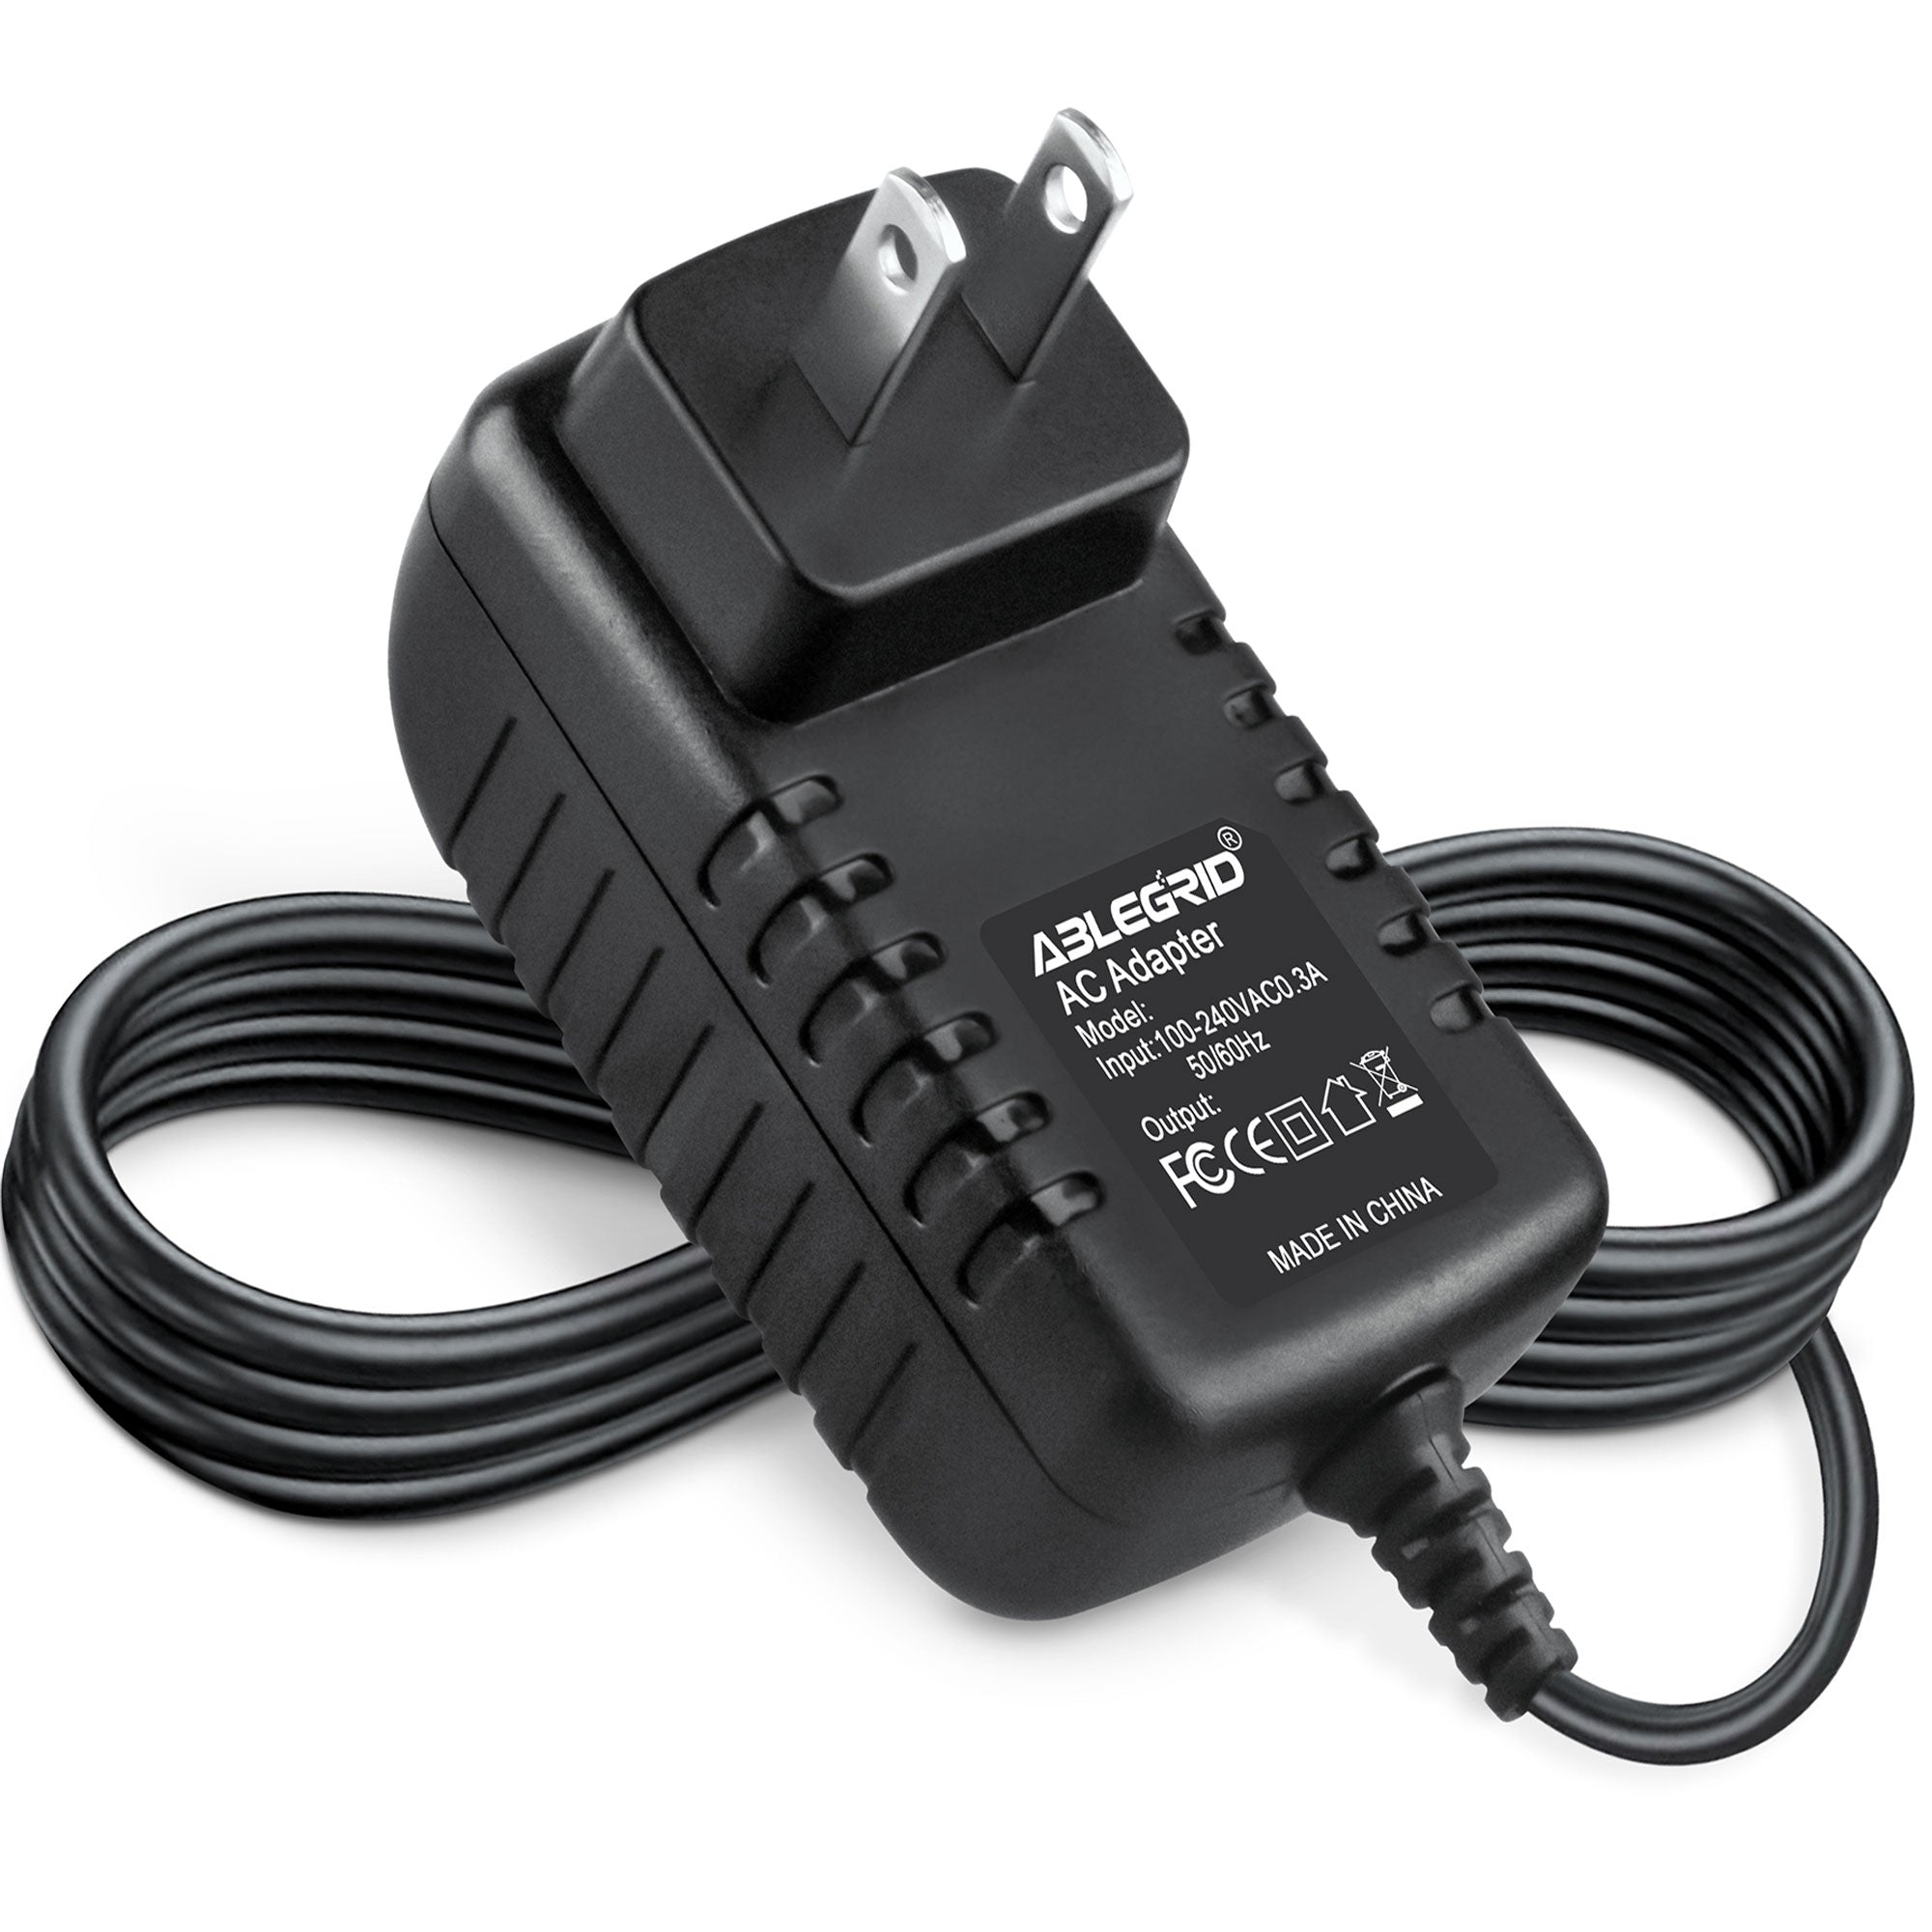 AbleGrid AC Adapter for Homedics CPS015B120080UF HK-N110-U120 PPADPEM37 Class2 Power Supply Cord Charger PSU